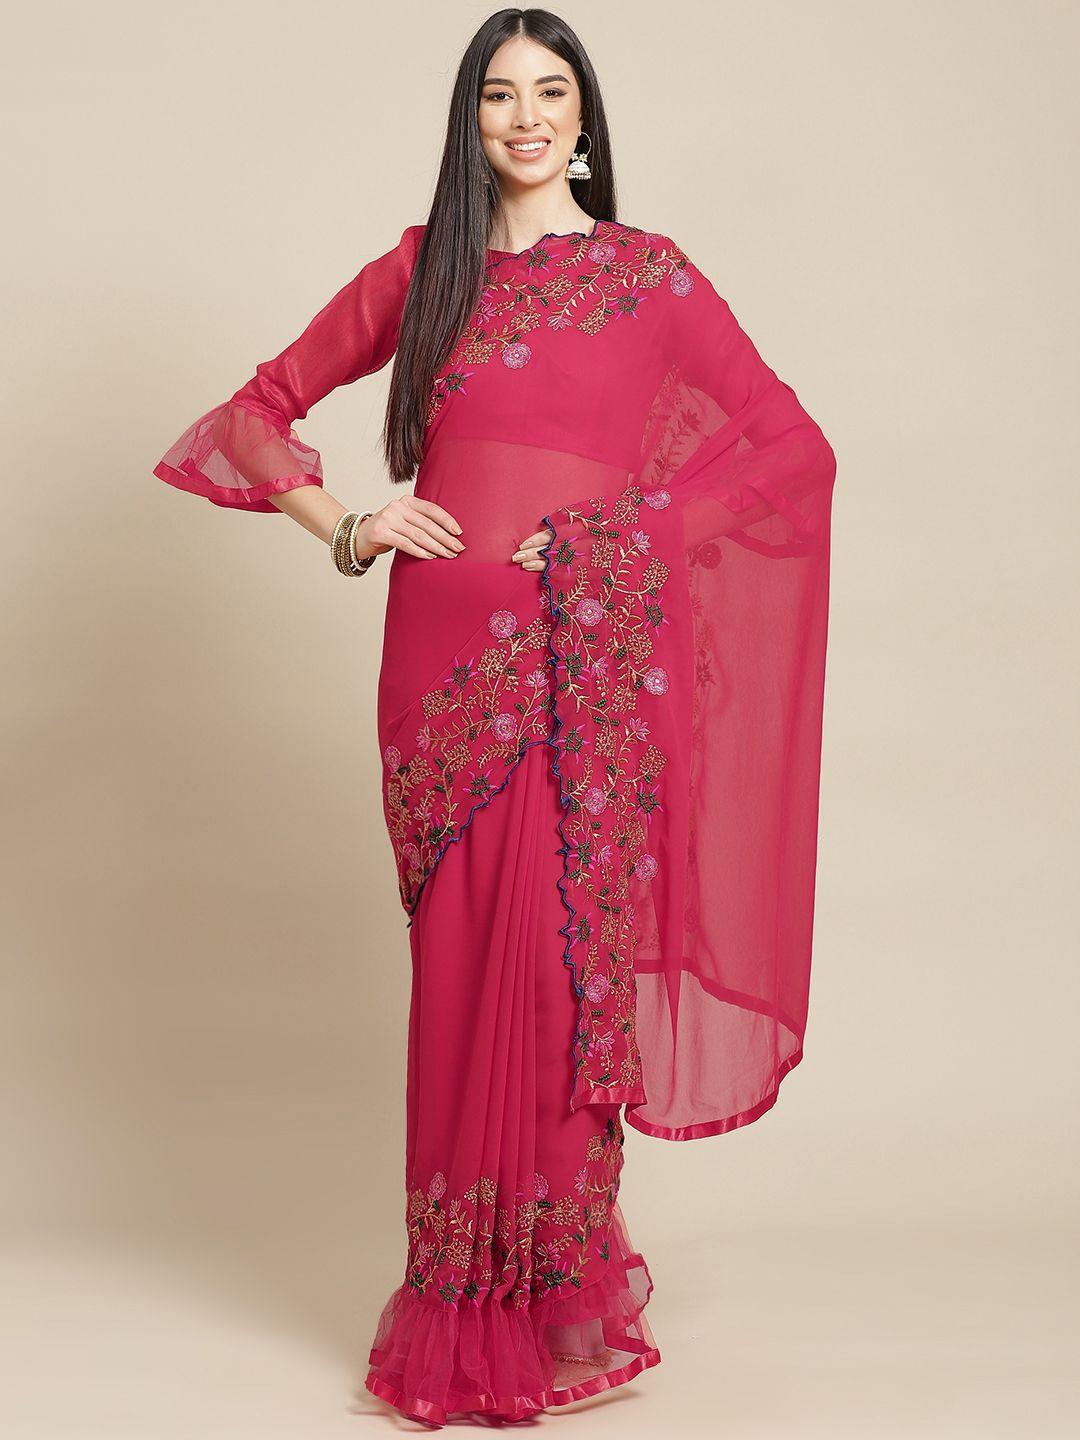 serona fabrics coral red & gold-toned embroidered border saree